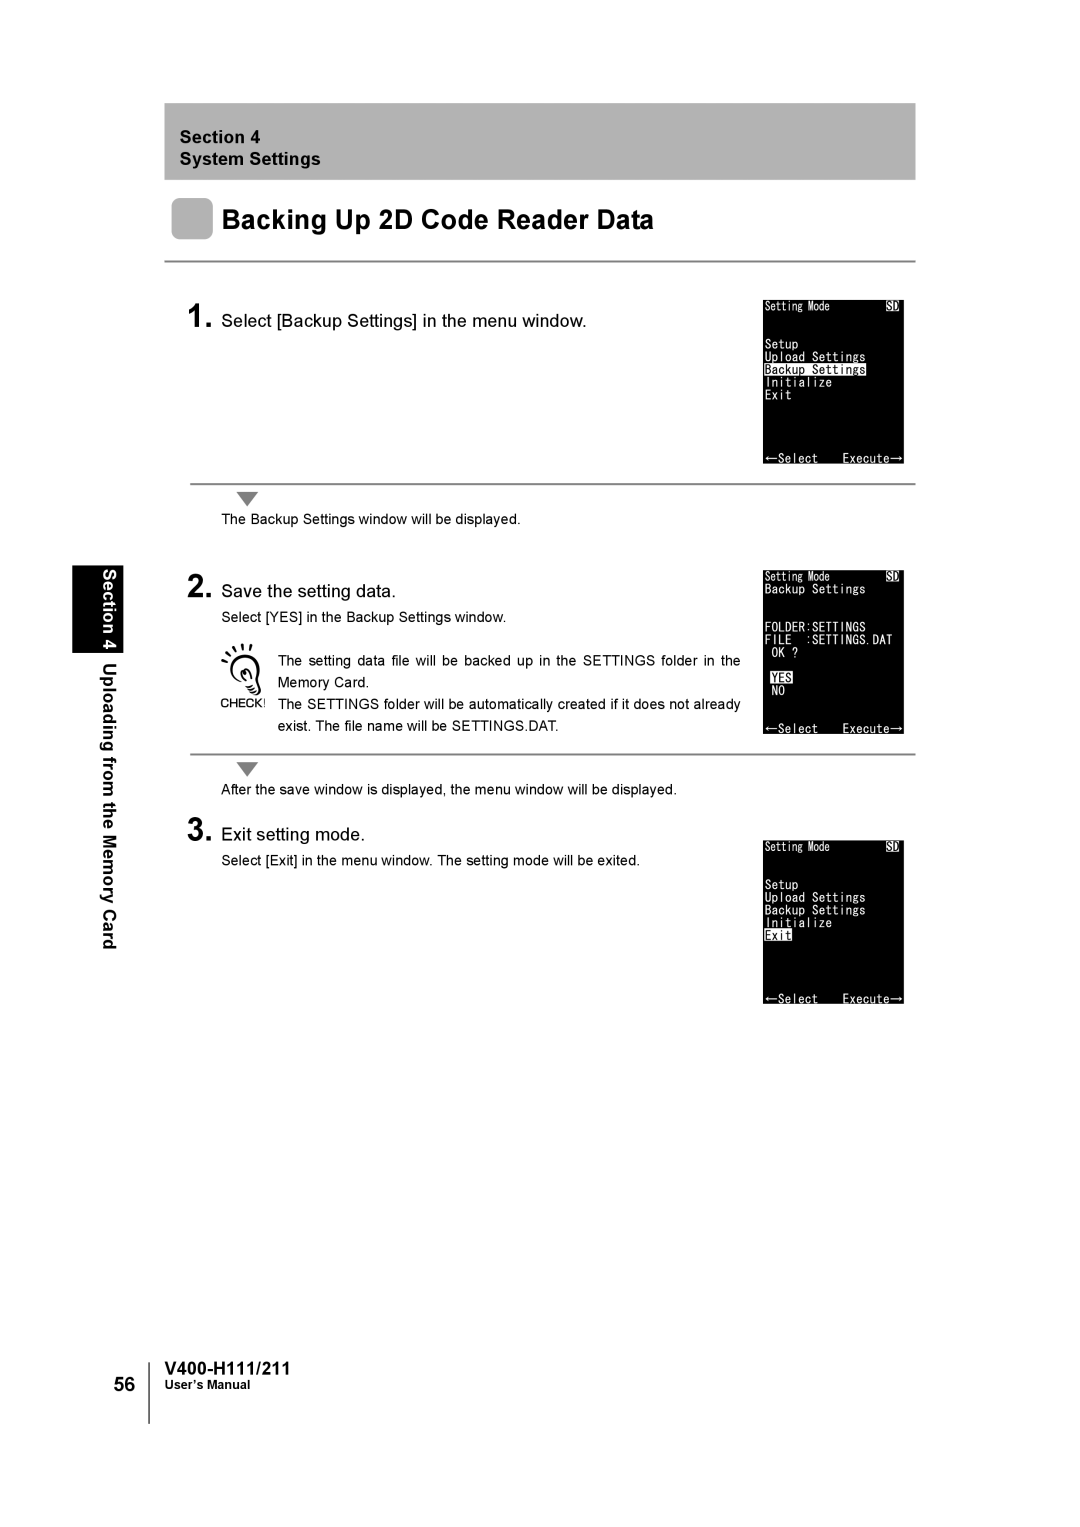 Omron V400-H111 user manual Backing Up 2D Code Reader Data, Select Backup Settings in the menu window 